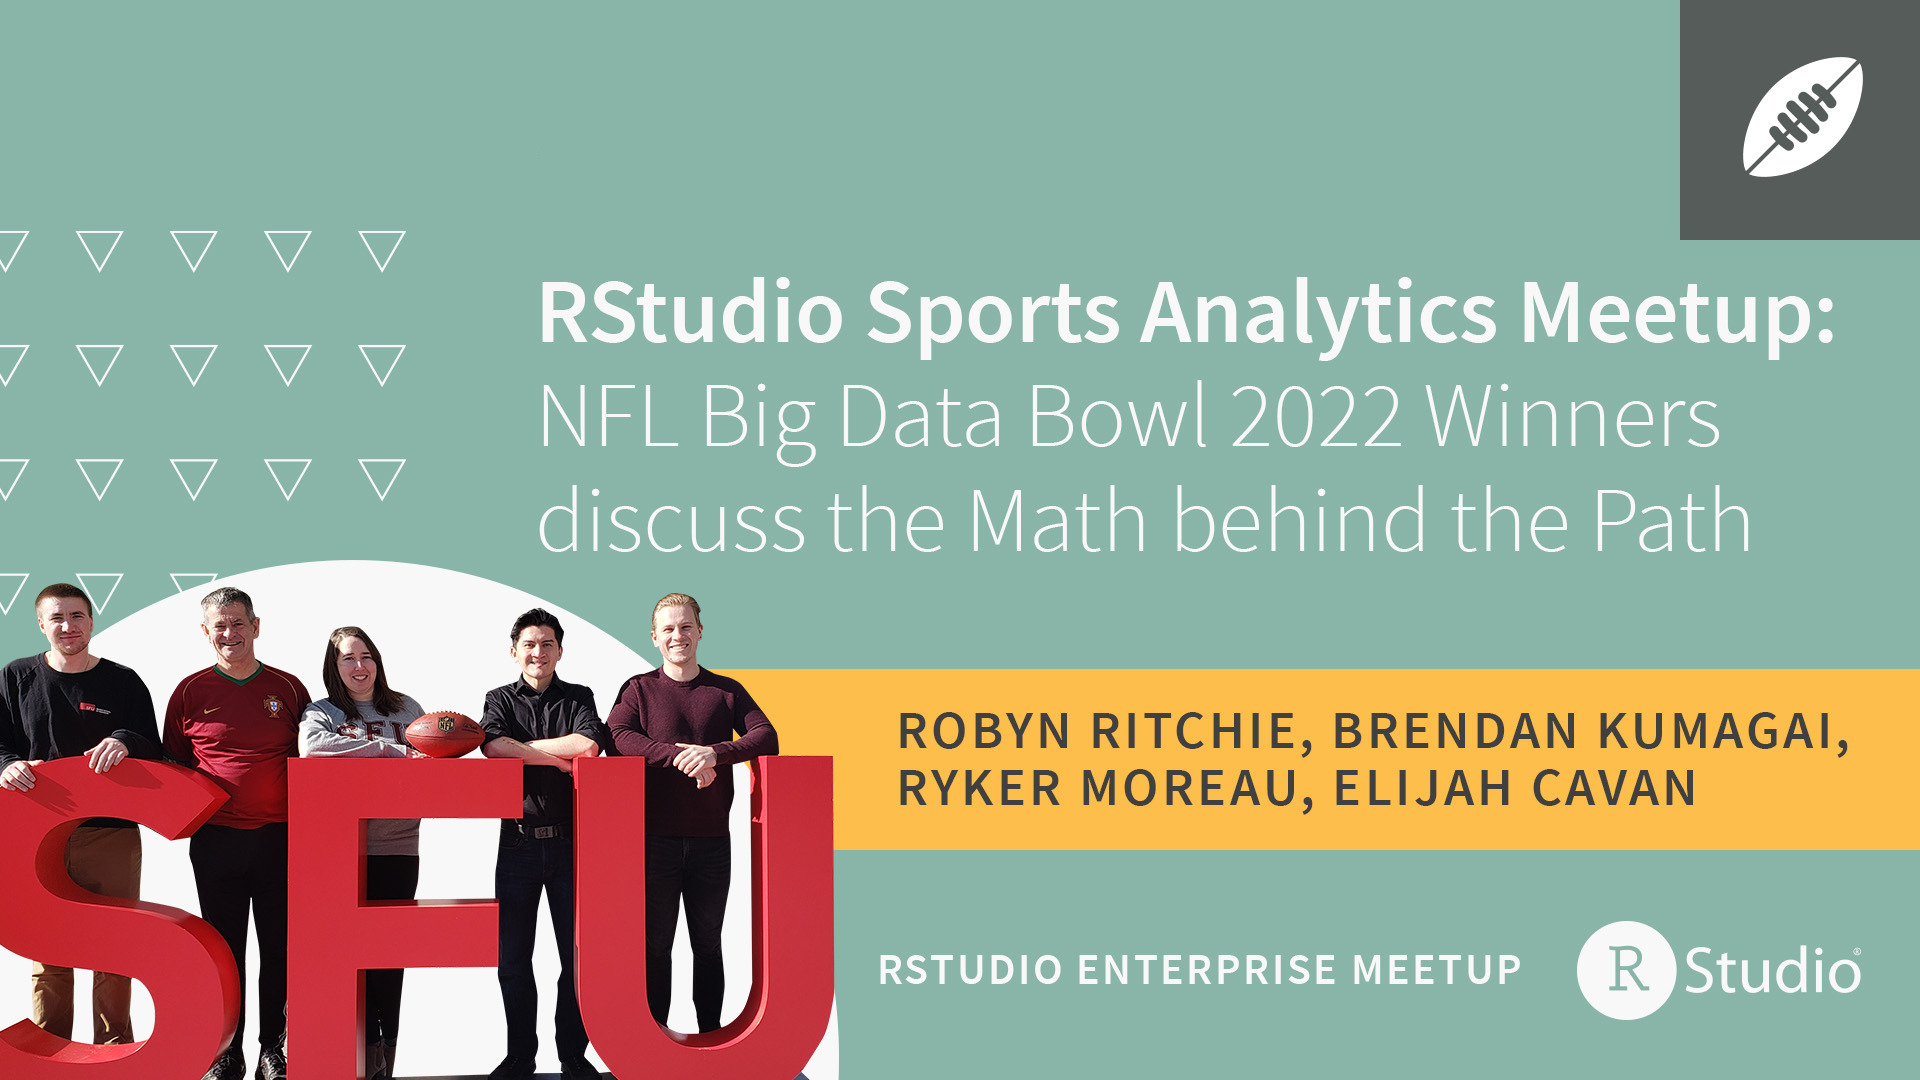 An image of the five members of the winning 2022 NFL Big Data Bowl team. The text says RStudio Sports Analytics Meetup NFL Big Data Bowl 2022 Winners discuss the Math behind the Path, Robyn Ritchie, Brendan Kumagai, Ryker Moreau, Elijah Cavan.